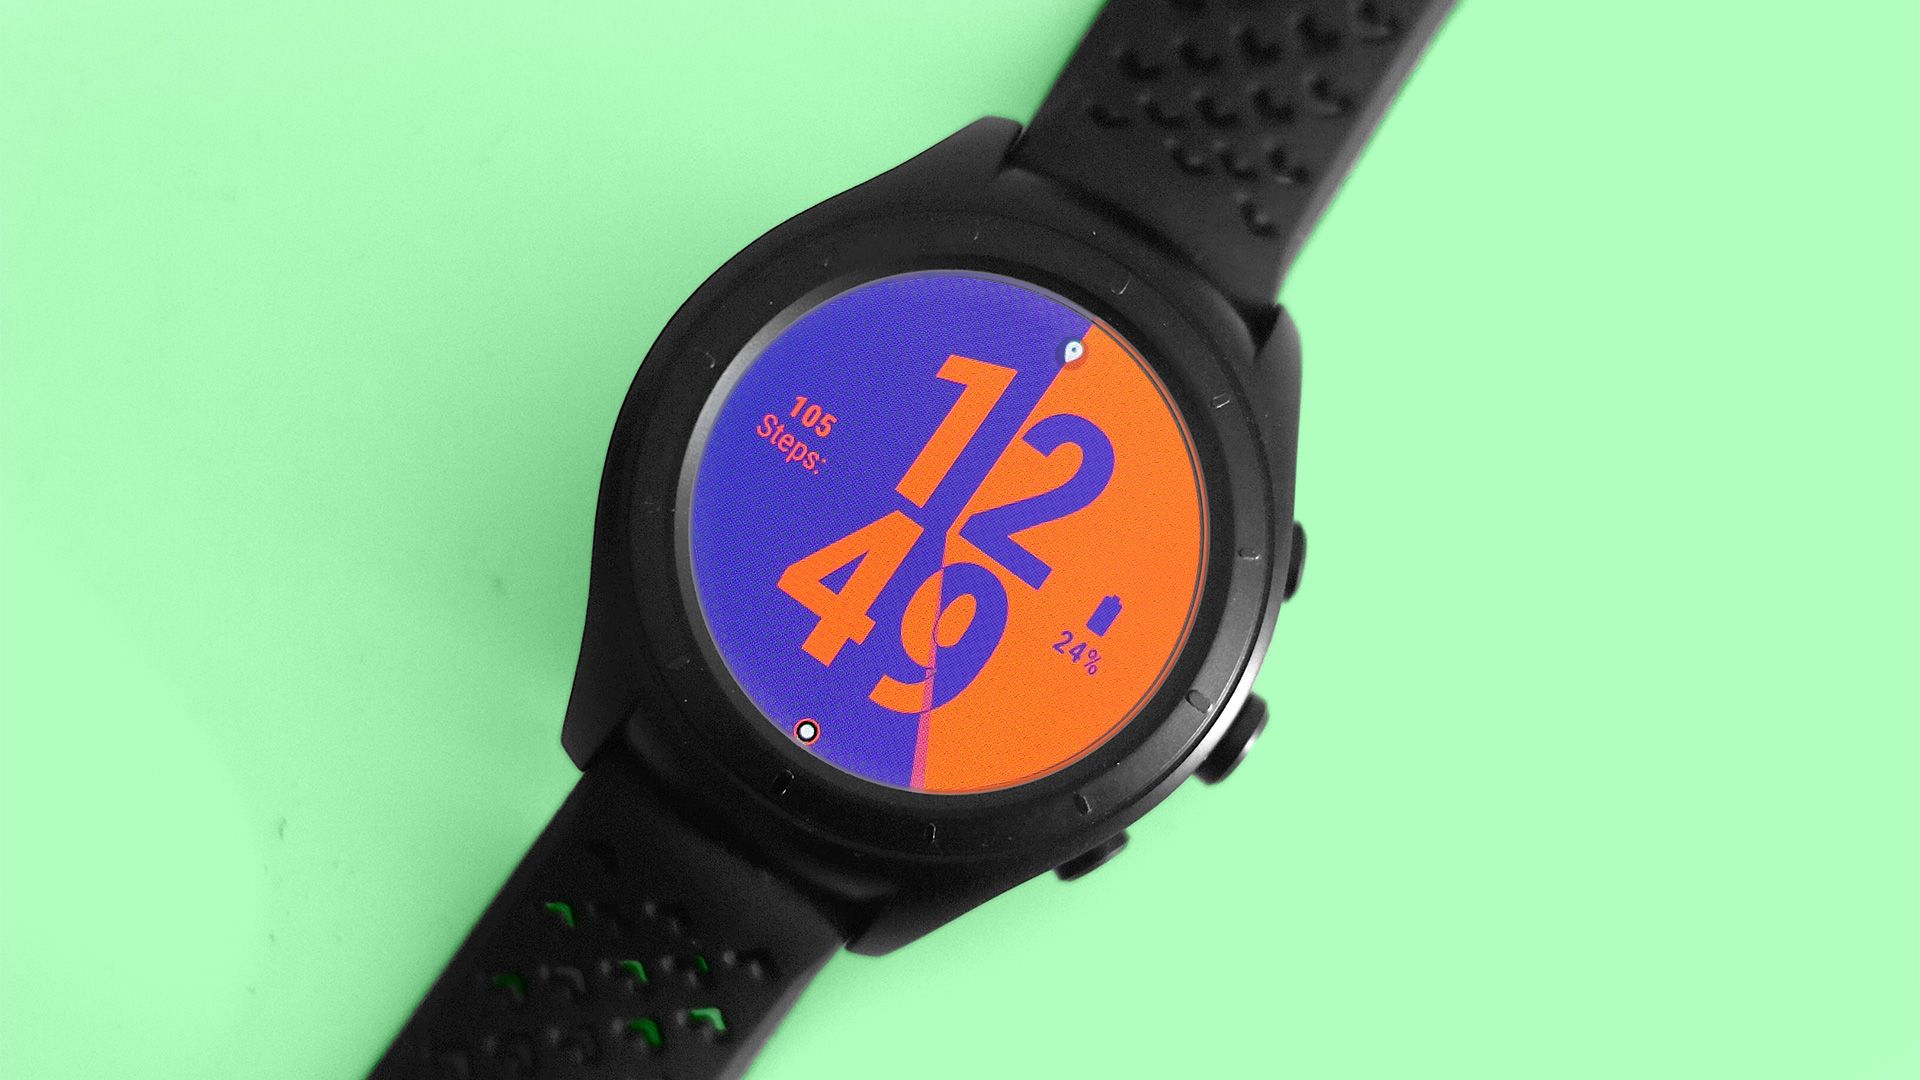 Google Pixel Watch could be coming alongside the Pixel 4 TechRadar